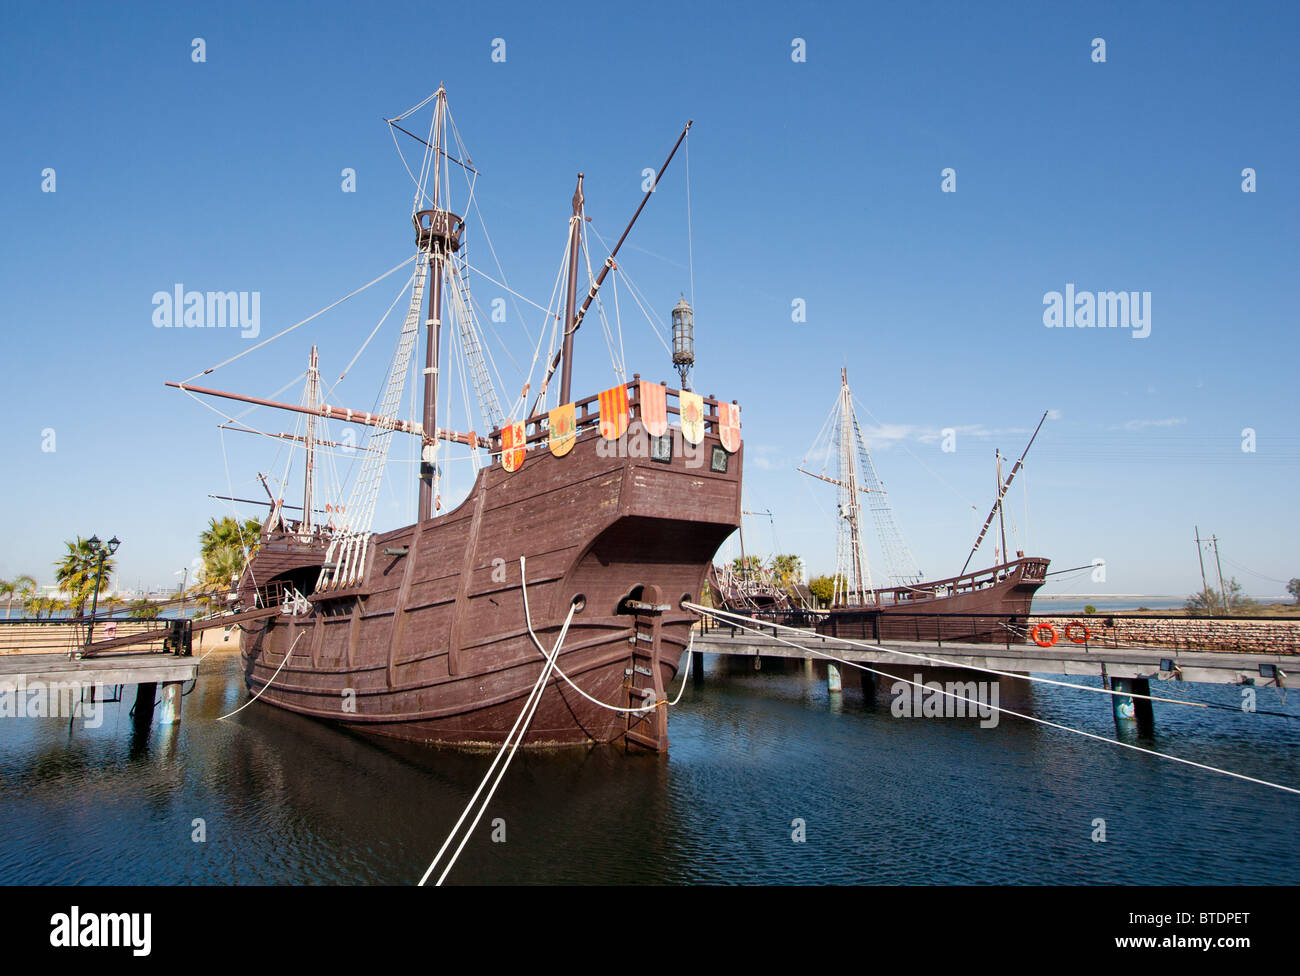 Réplique du navire de Christophe Colomb, la Santa Maria, Huelva, Espagne Banque D'Images